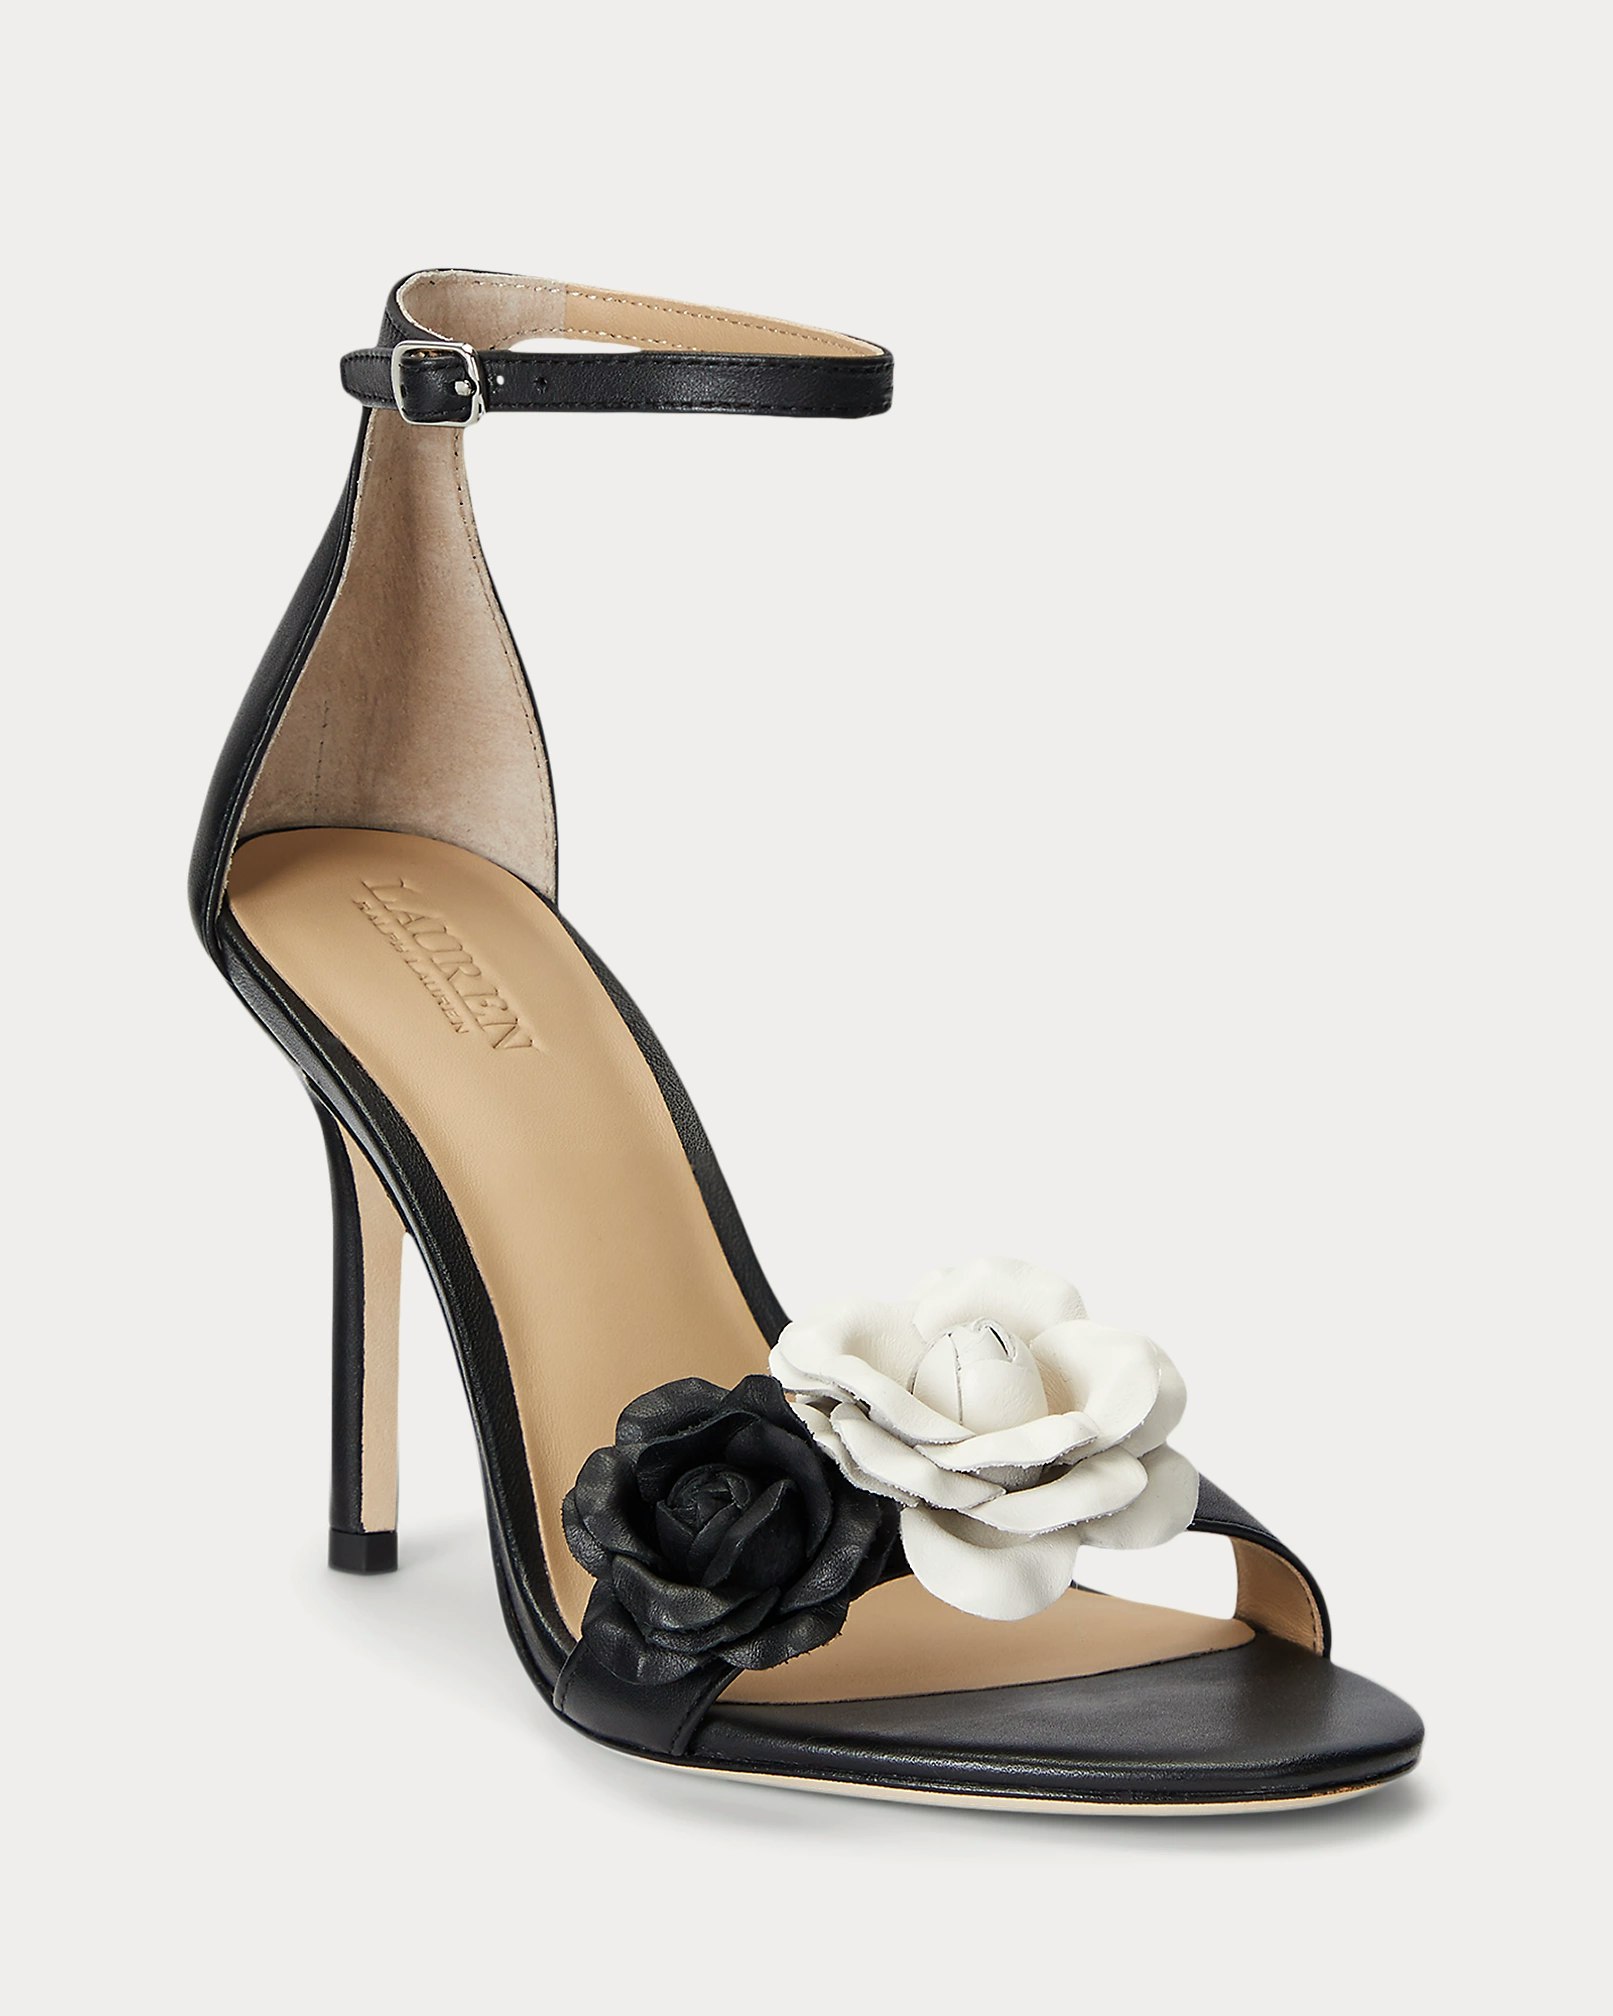 Ralph Lauren - Lauren - Allie Floral-Trim Nappa Leather Sandal - Black/Soft White